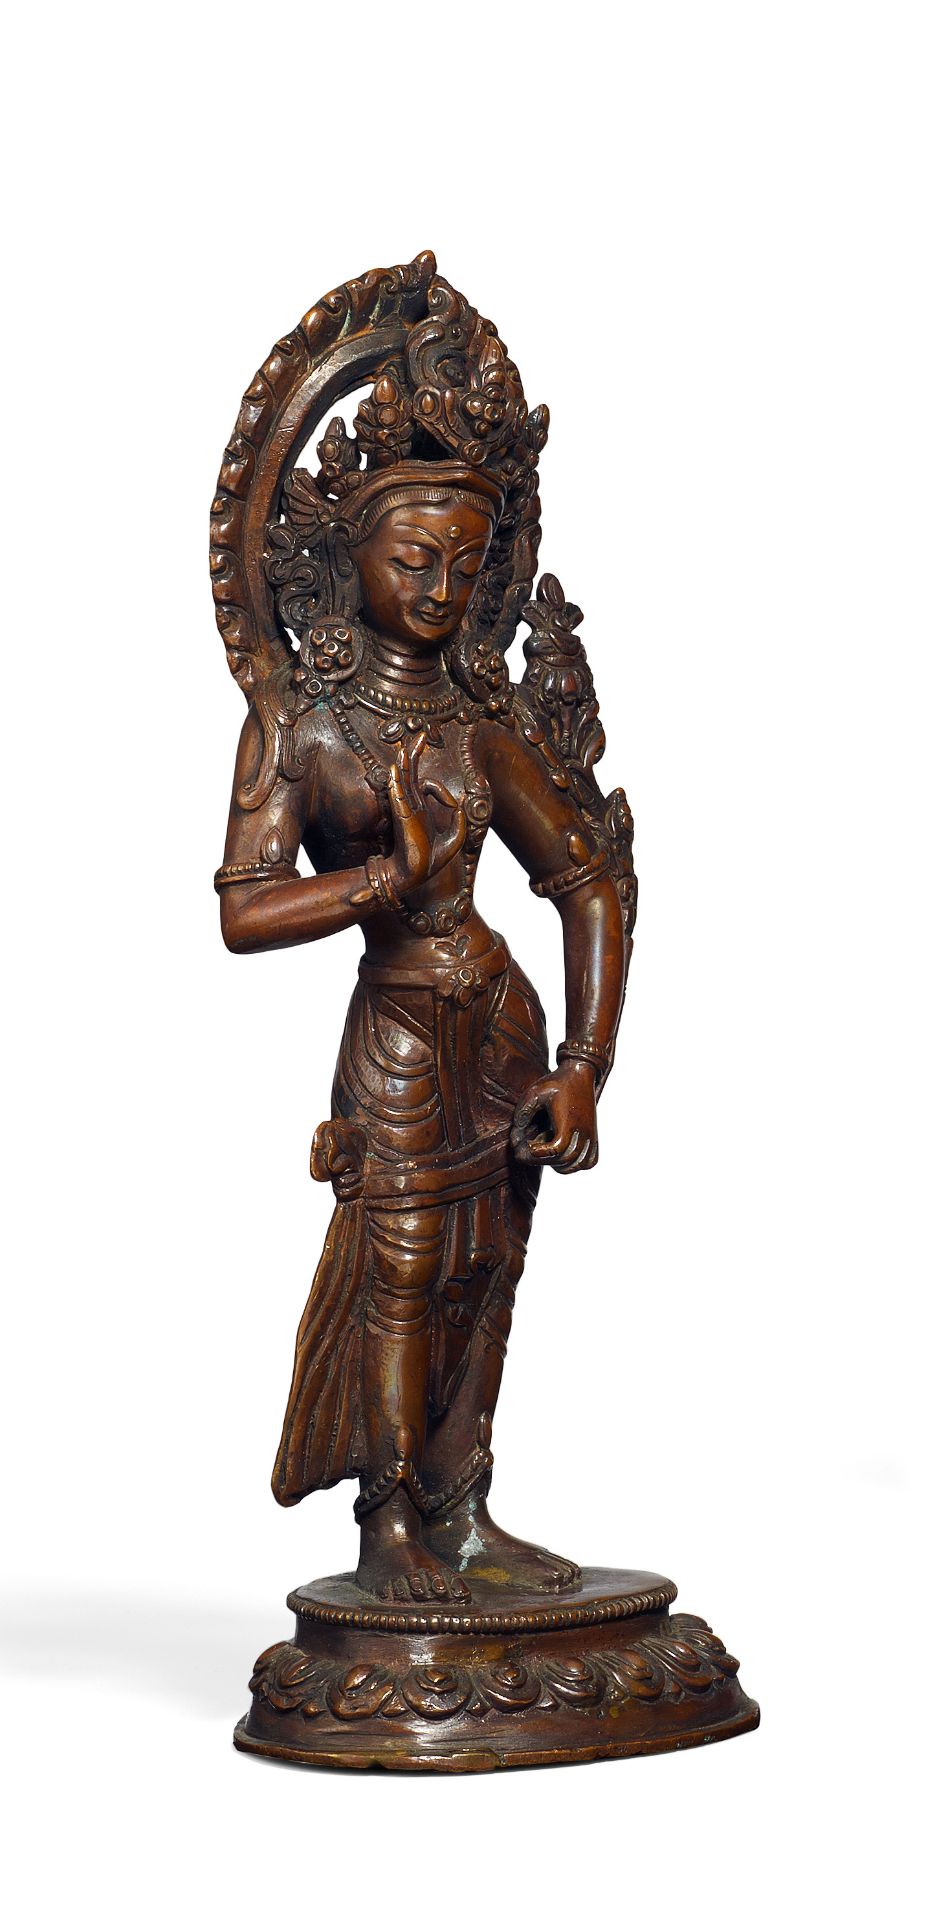 STANDING TARA. Nepal. 19th/20th c. Copper bronze. 951g. H.22.3cm. Condition A/B. Provenance: